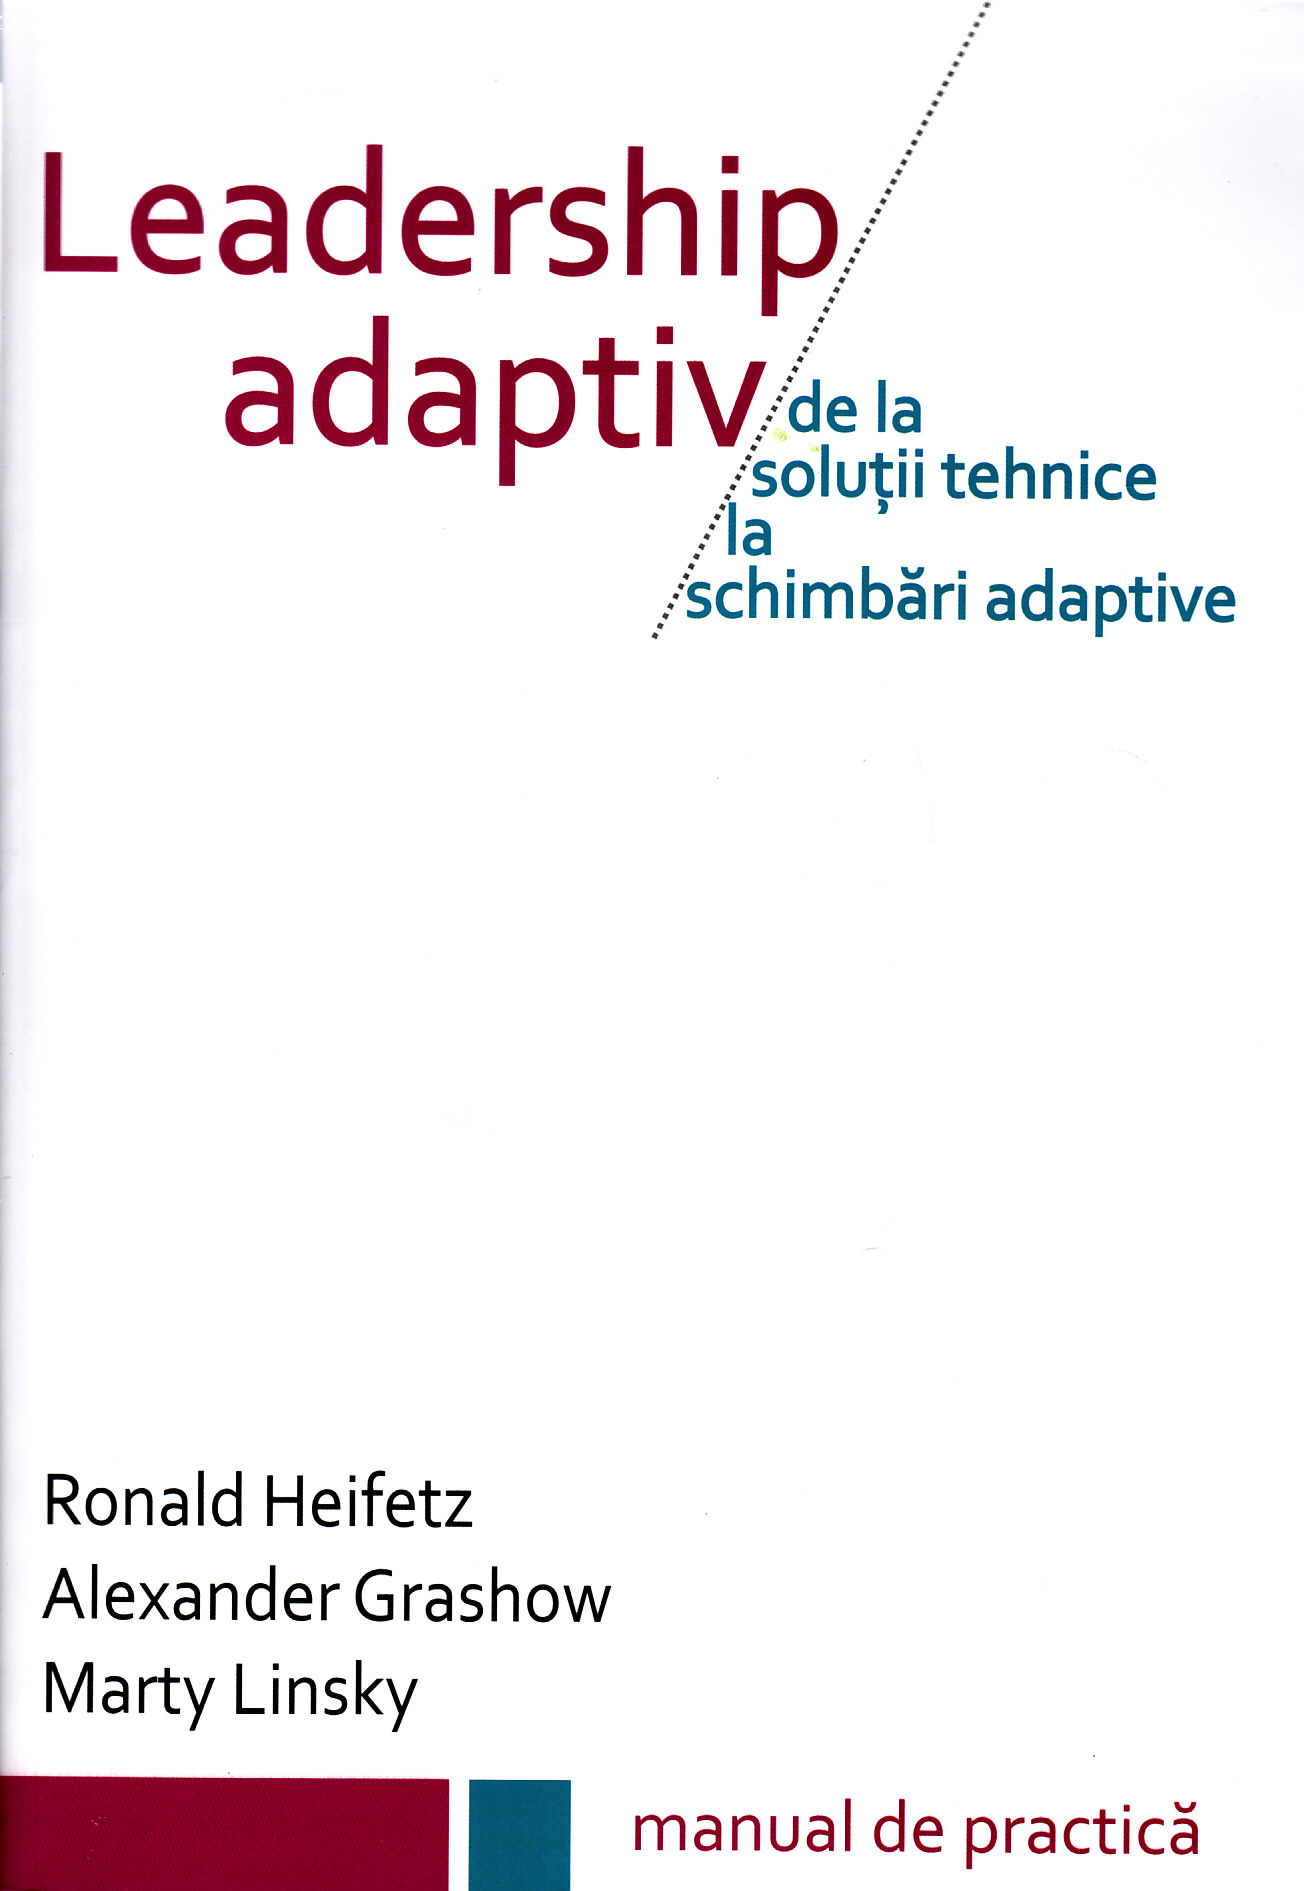 Leadership adaptiv - Ronald Heifetz, Alexander Grashow, Marty Linsky